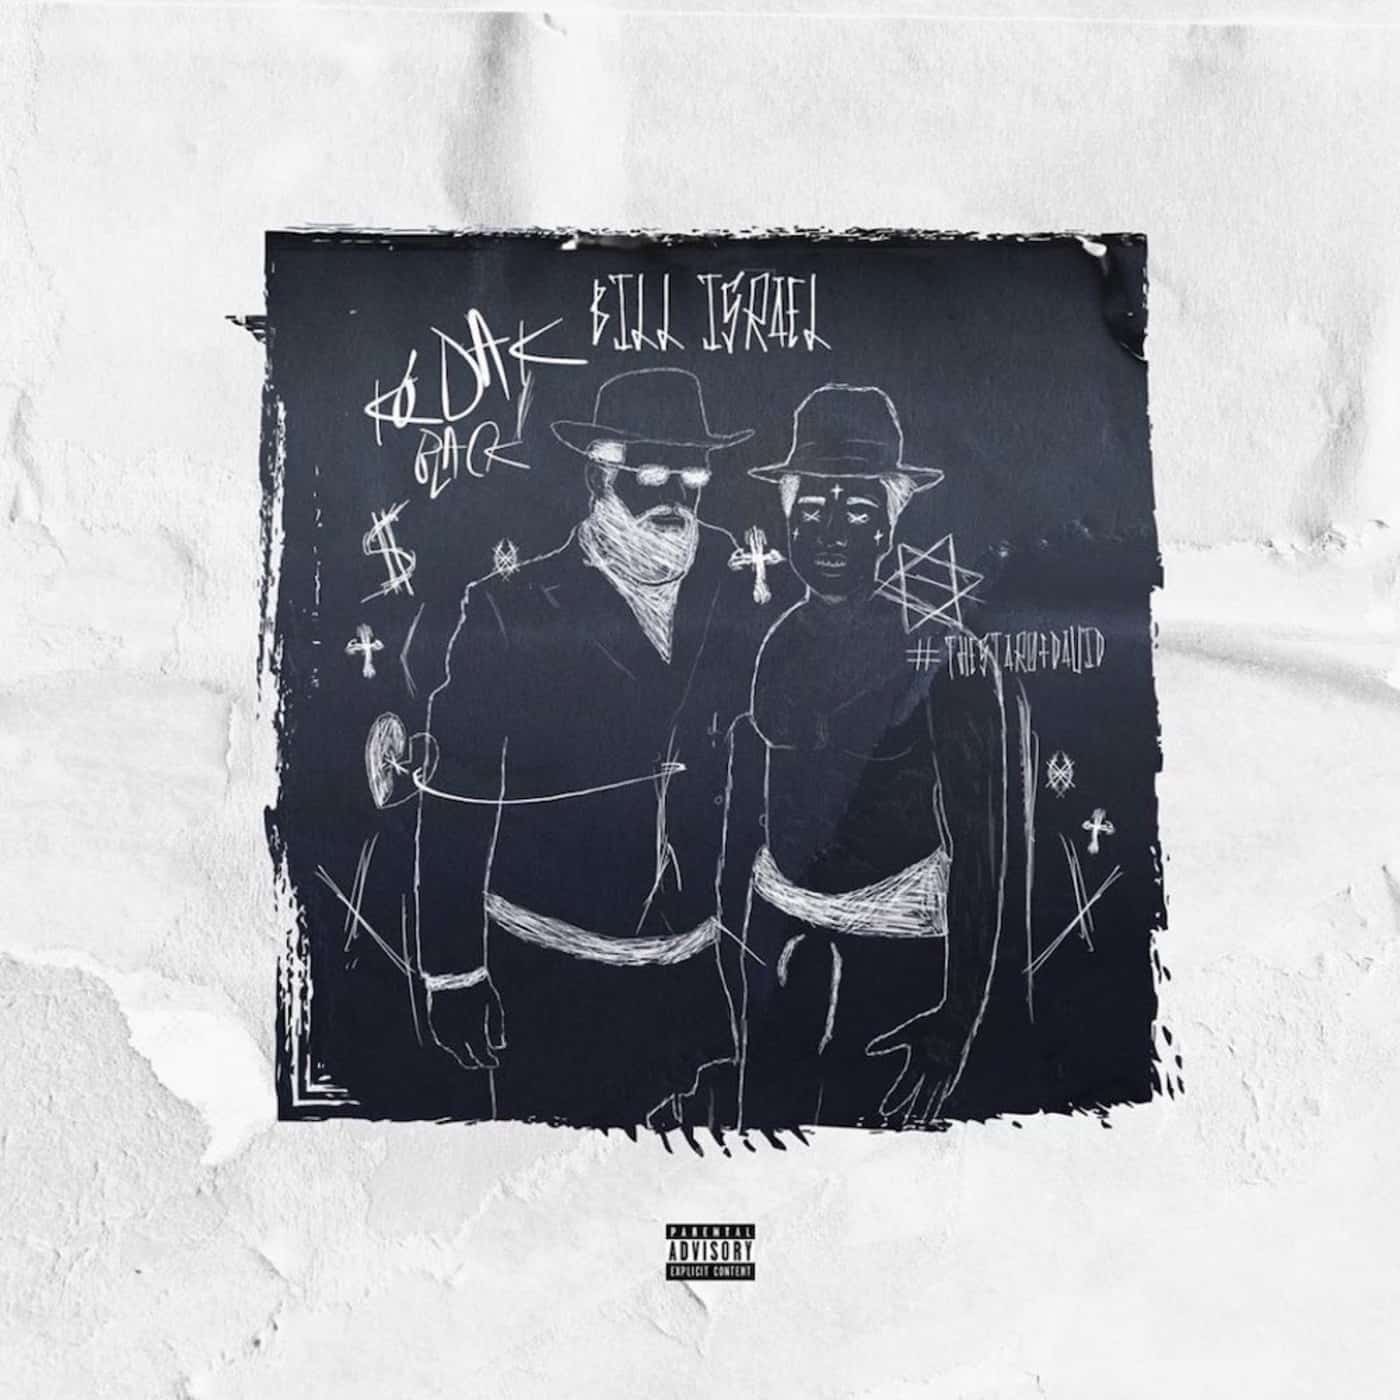 Stream Kodak Black's New Album Bill Israel Feat. Gucci Mane, Lil Yachty, Tory Lanez